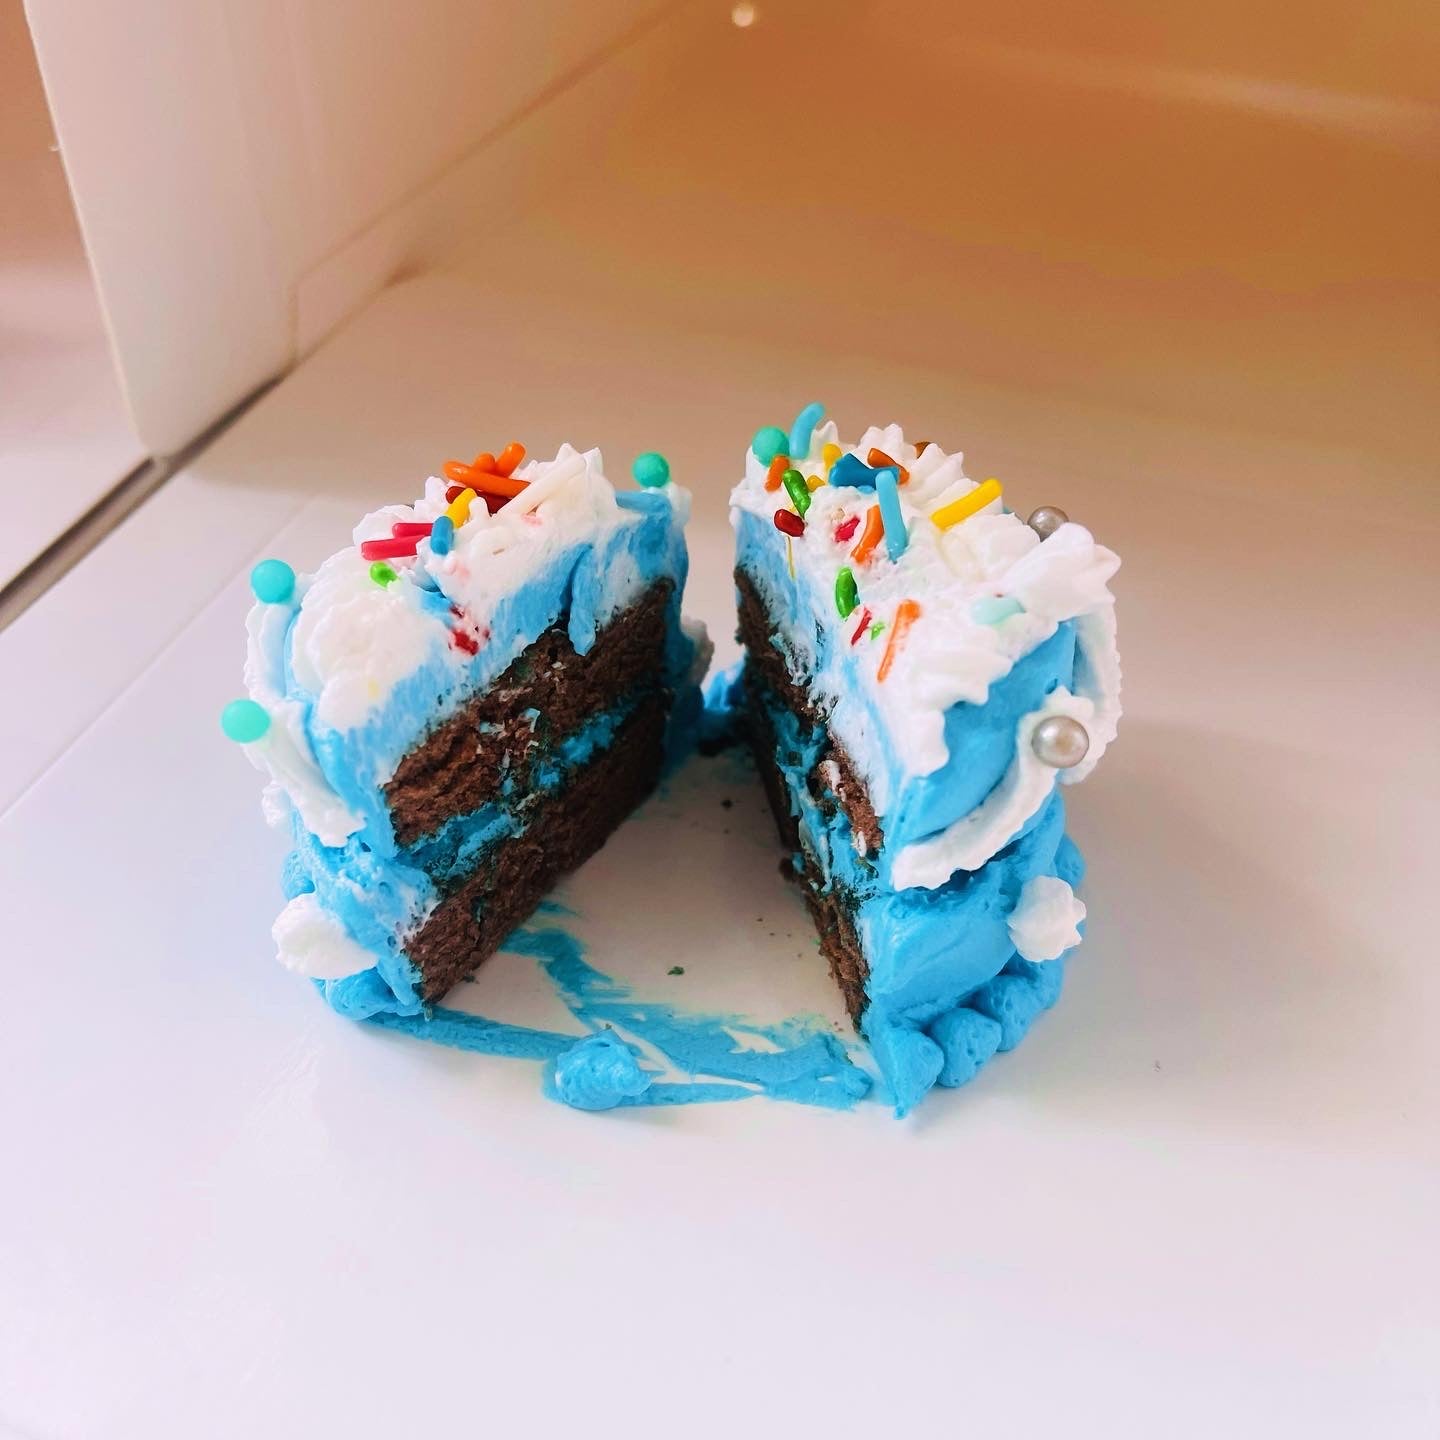 April fool’s day mini cake in a big box